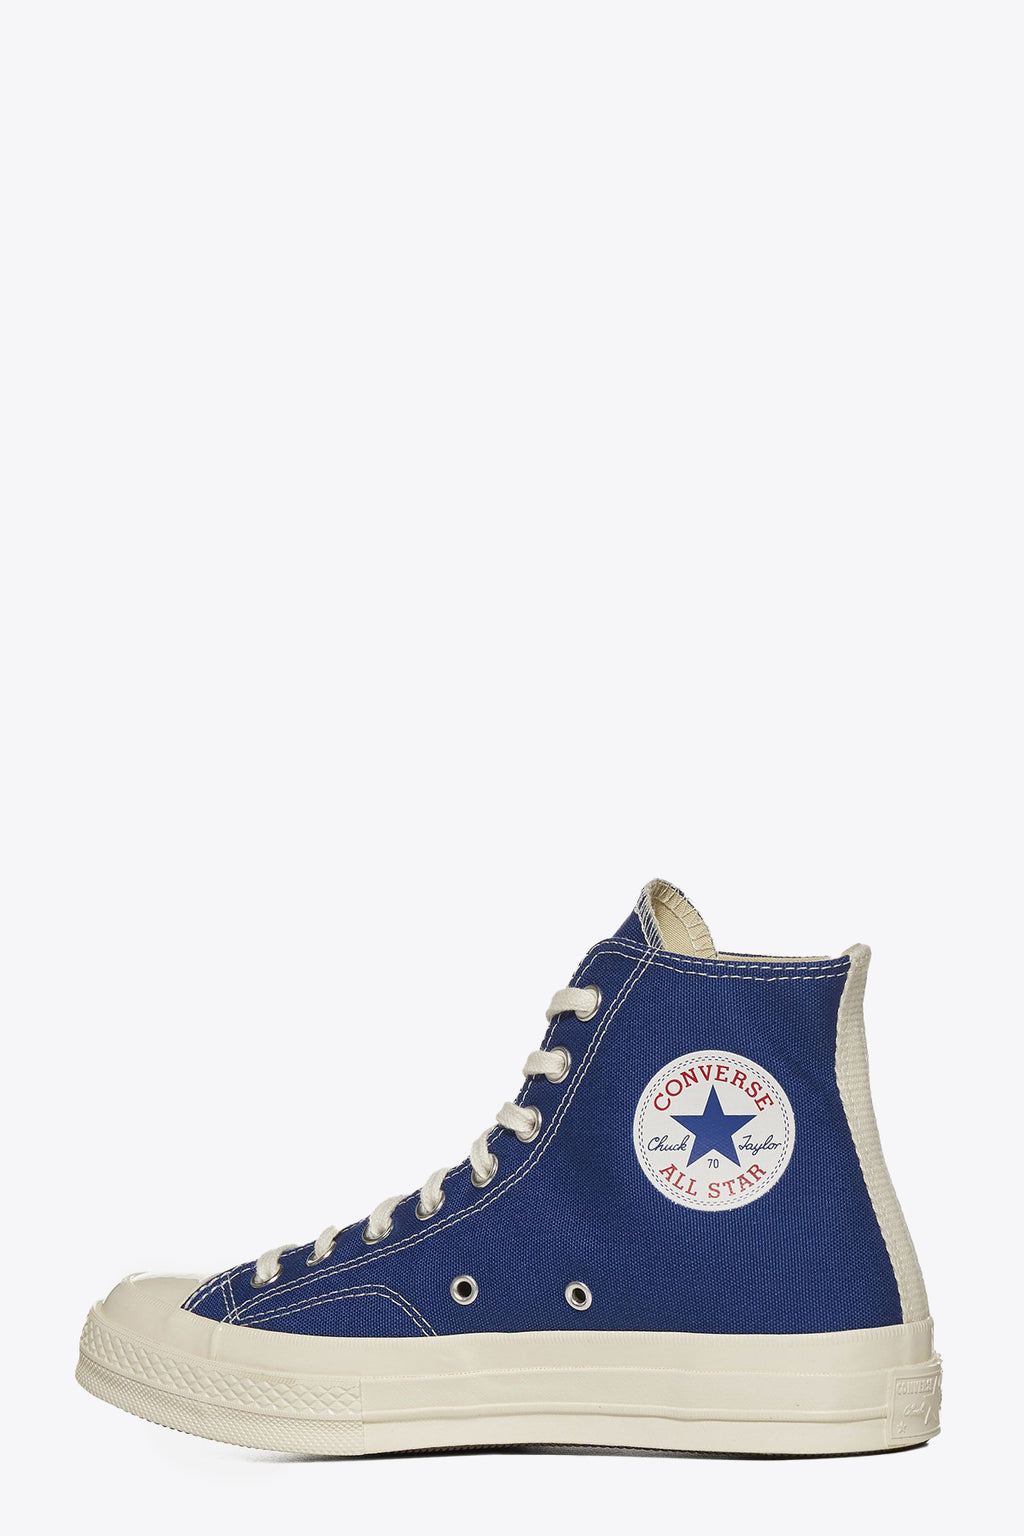 alt-image__Converse-collaboration-Chuck-Taylor-70's-royal-blue-canvas-high-sneaker